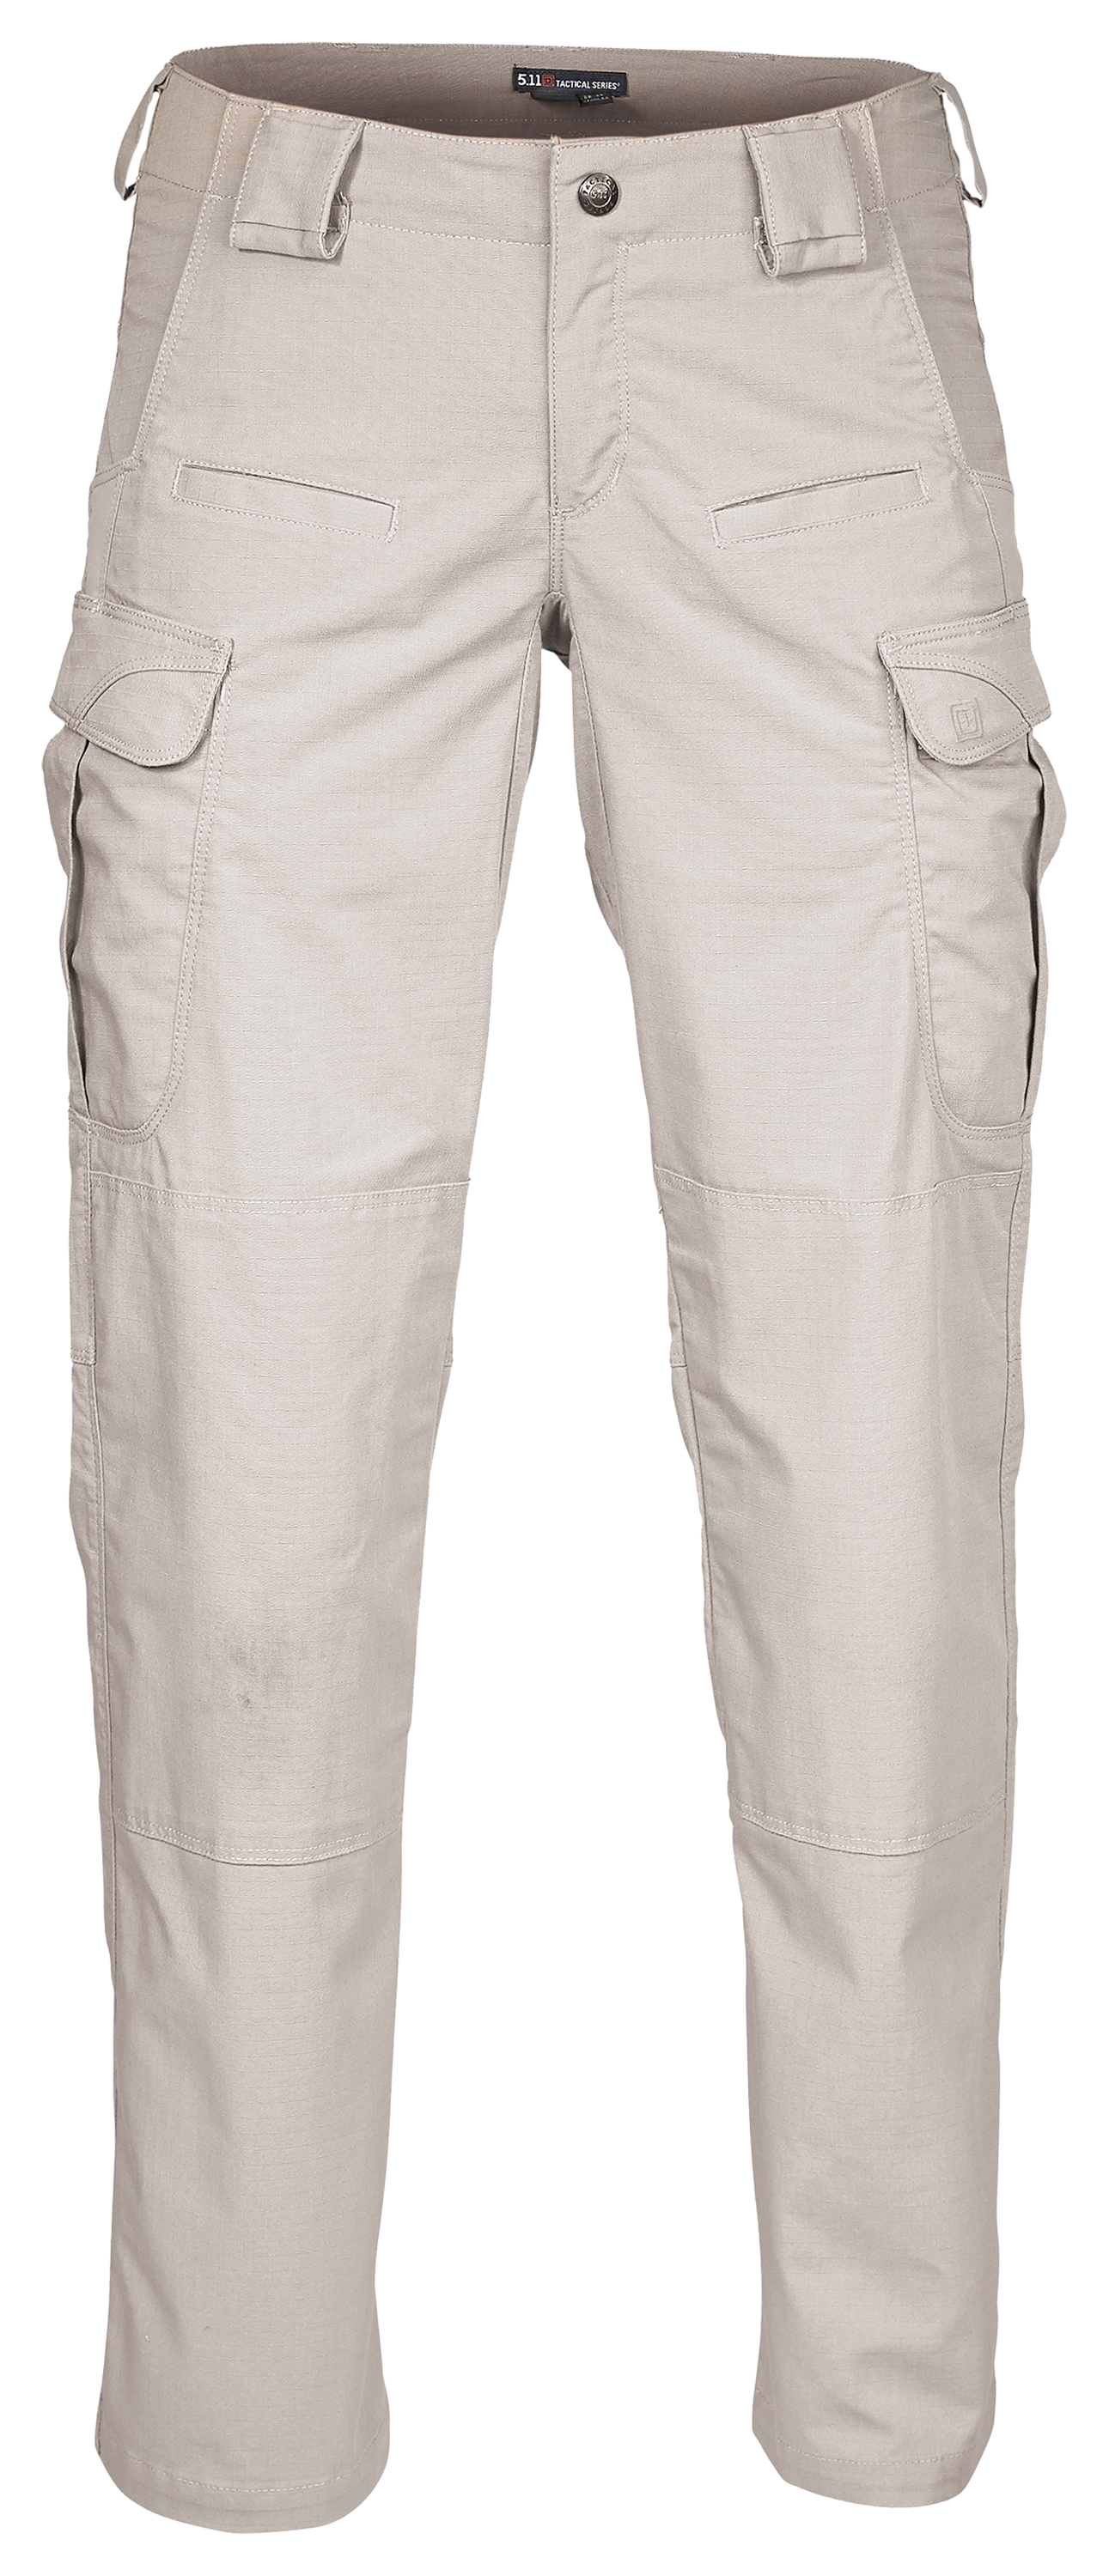 5.11 Stryke Tactical Pants For Ladies Khaki 4 Long